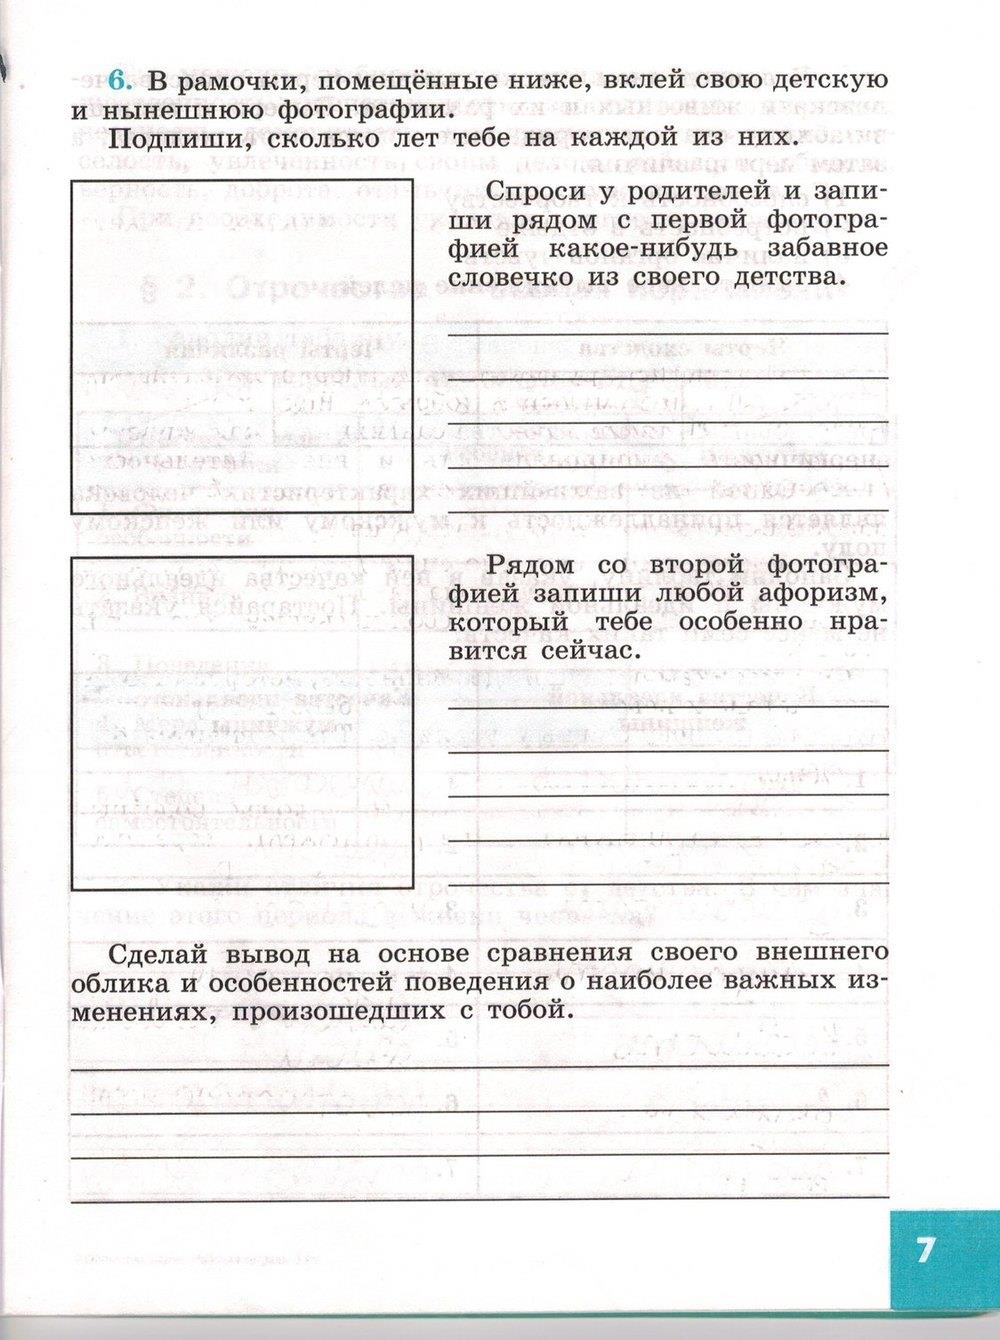 гдз 5 класс рабочая тетрадь страница 7 обществознание Иванова, Хотеенкова